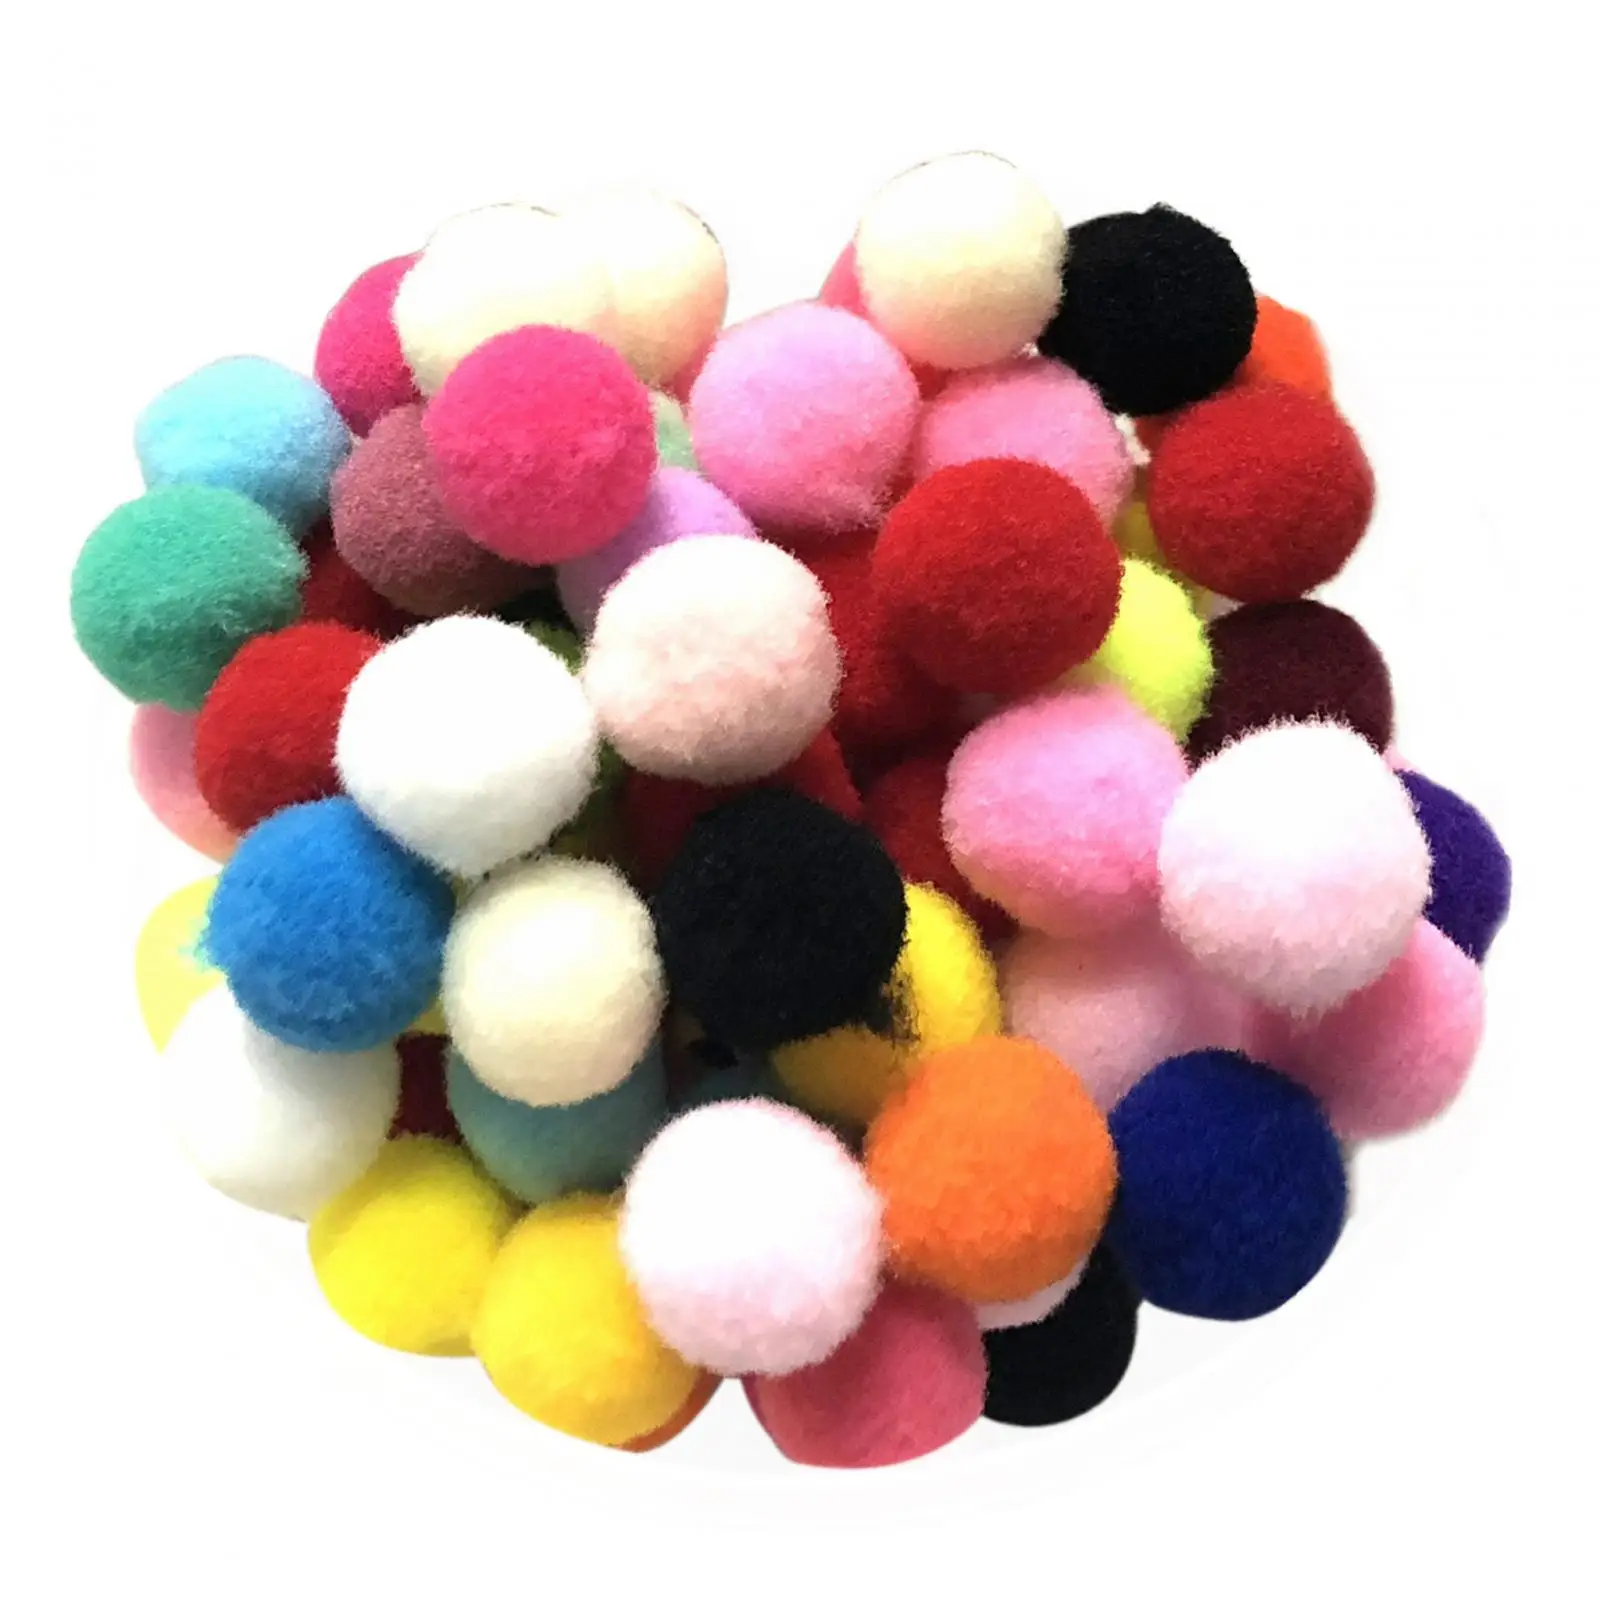 100Pcs Assorted pompoms Kids Craft Arts Pom Poms Balls Bright Colors Balls Cute Balls for Festival Wedding Toys Party Decoration